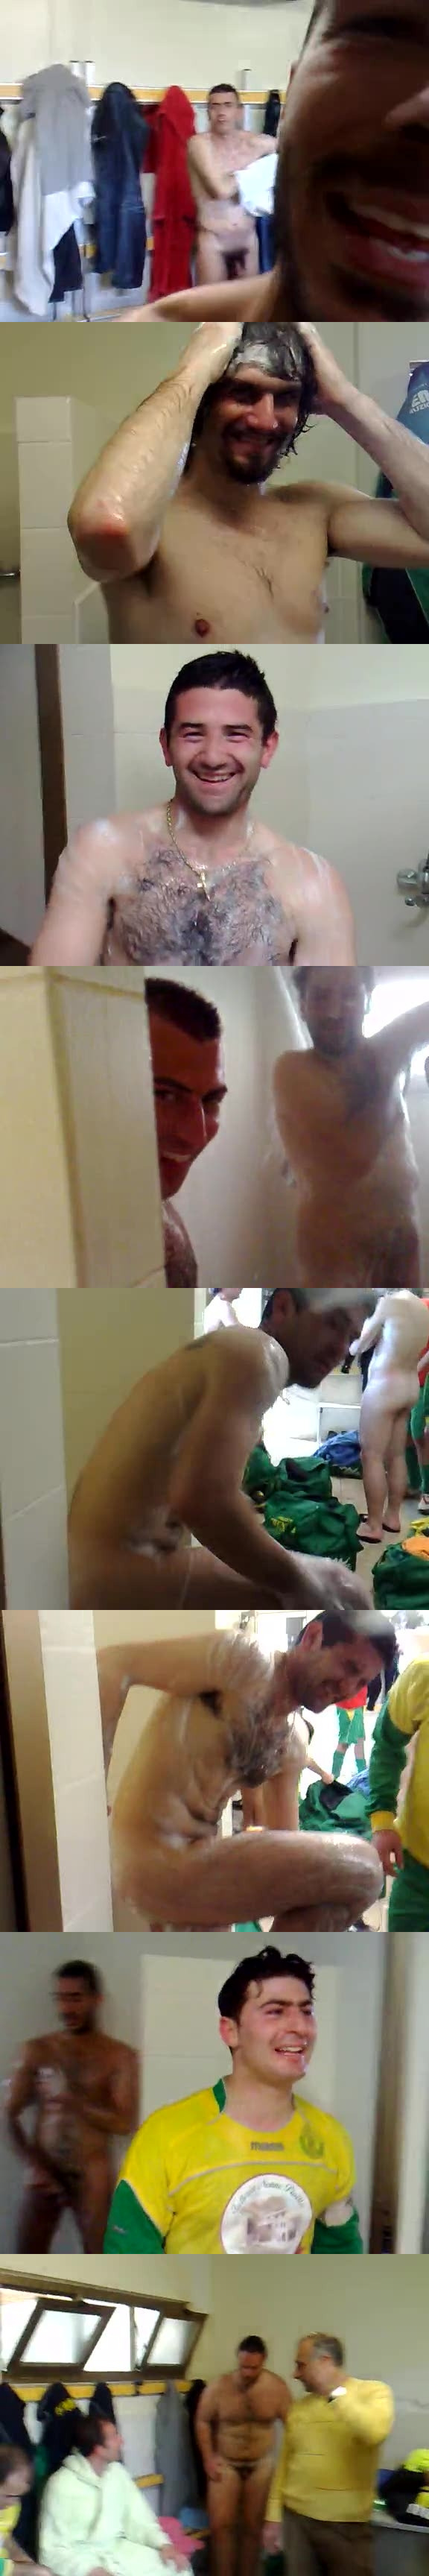 naked footballers in locker room after game